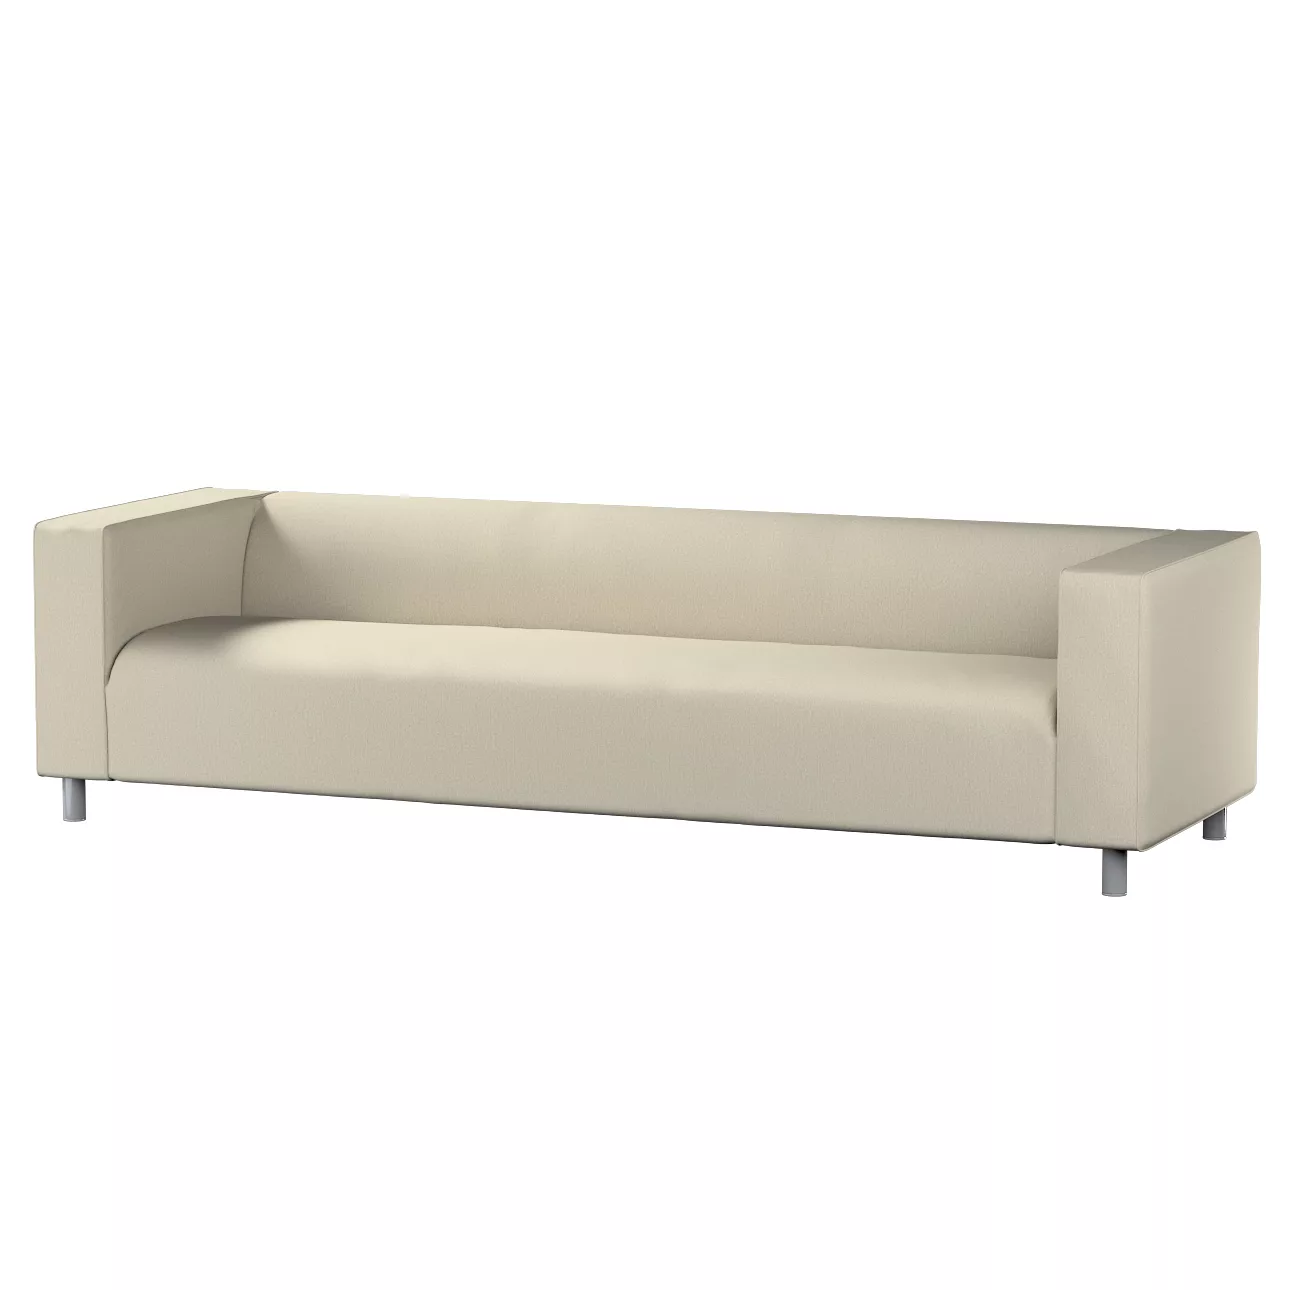 Bezug für Klippan 4-Sitzer Sofa, beige-grau, Bezug für Klippan 4-Sitzer, Ma günstig online kaufen